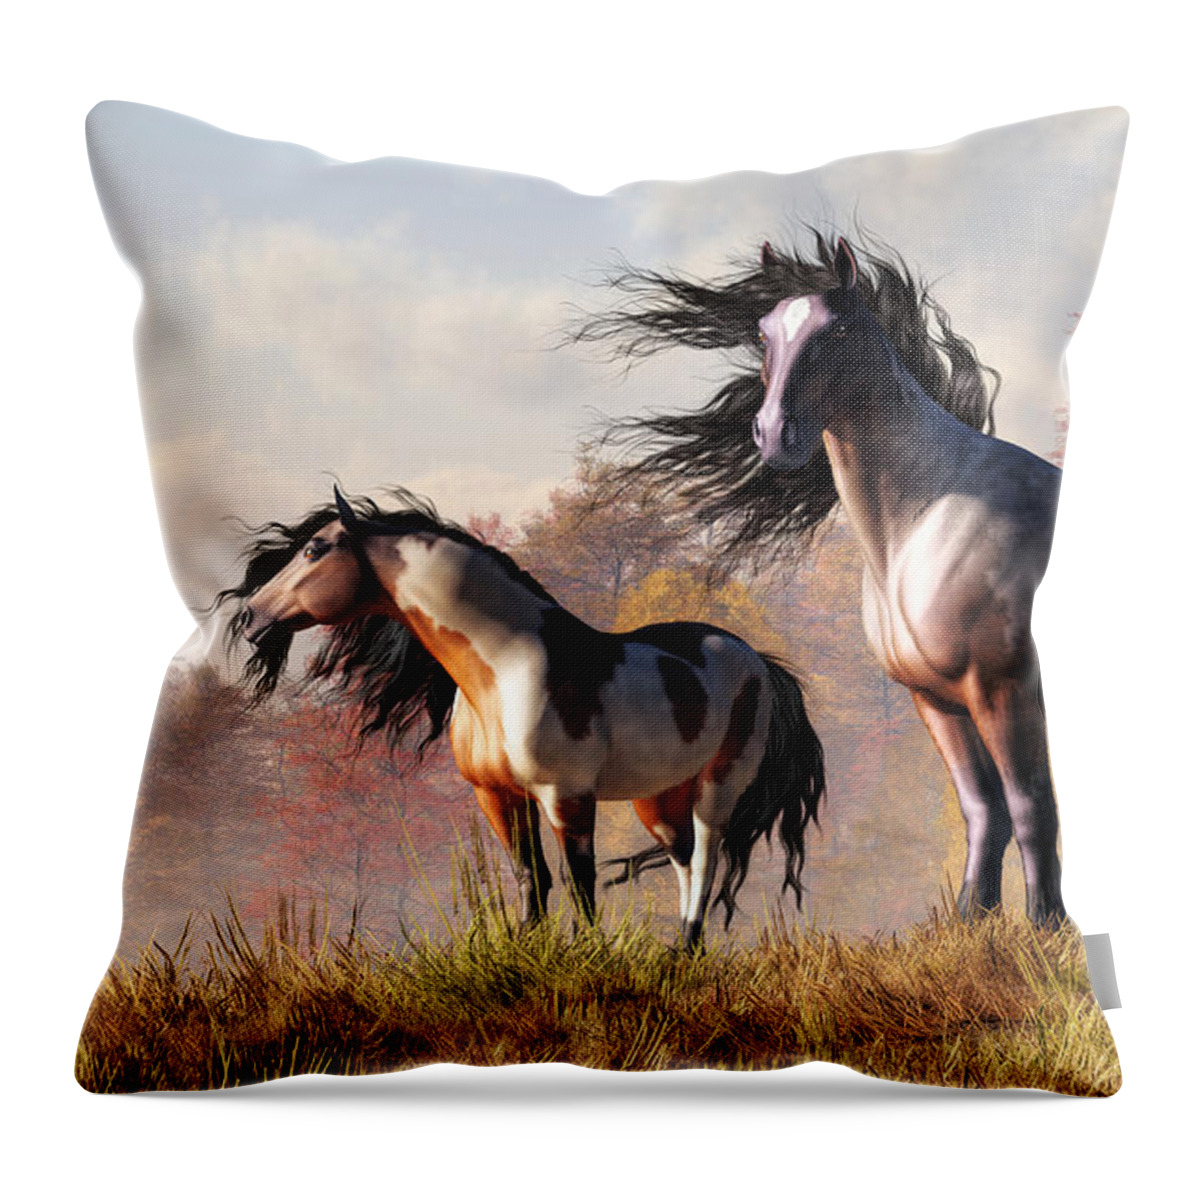 Horses In Fall Throw Pillow featuring the digital art Horses in Fall by Daniel Eskridge